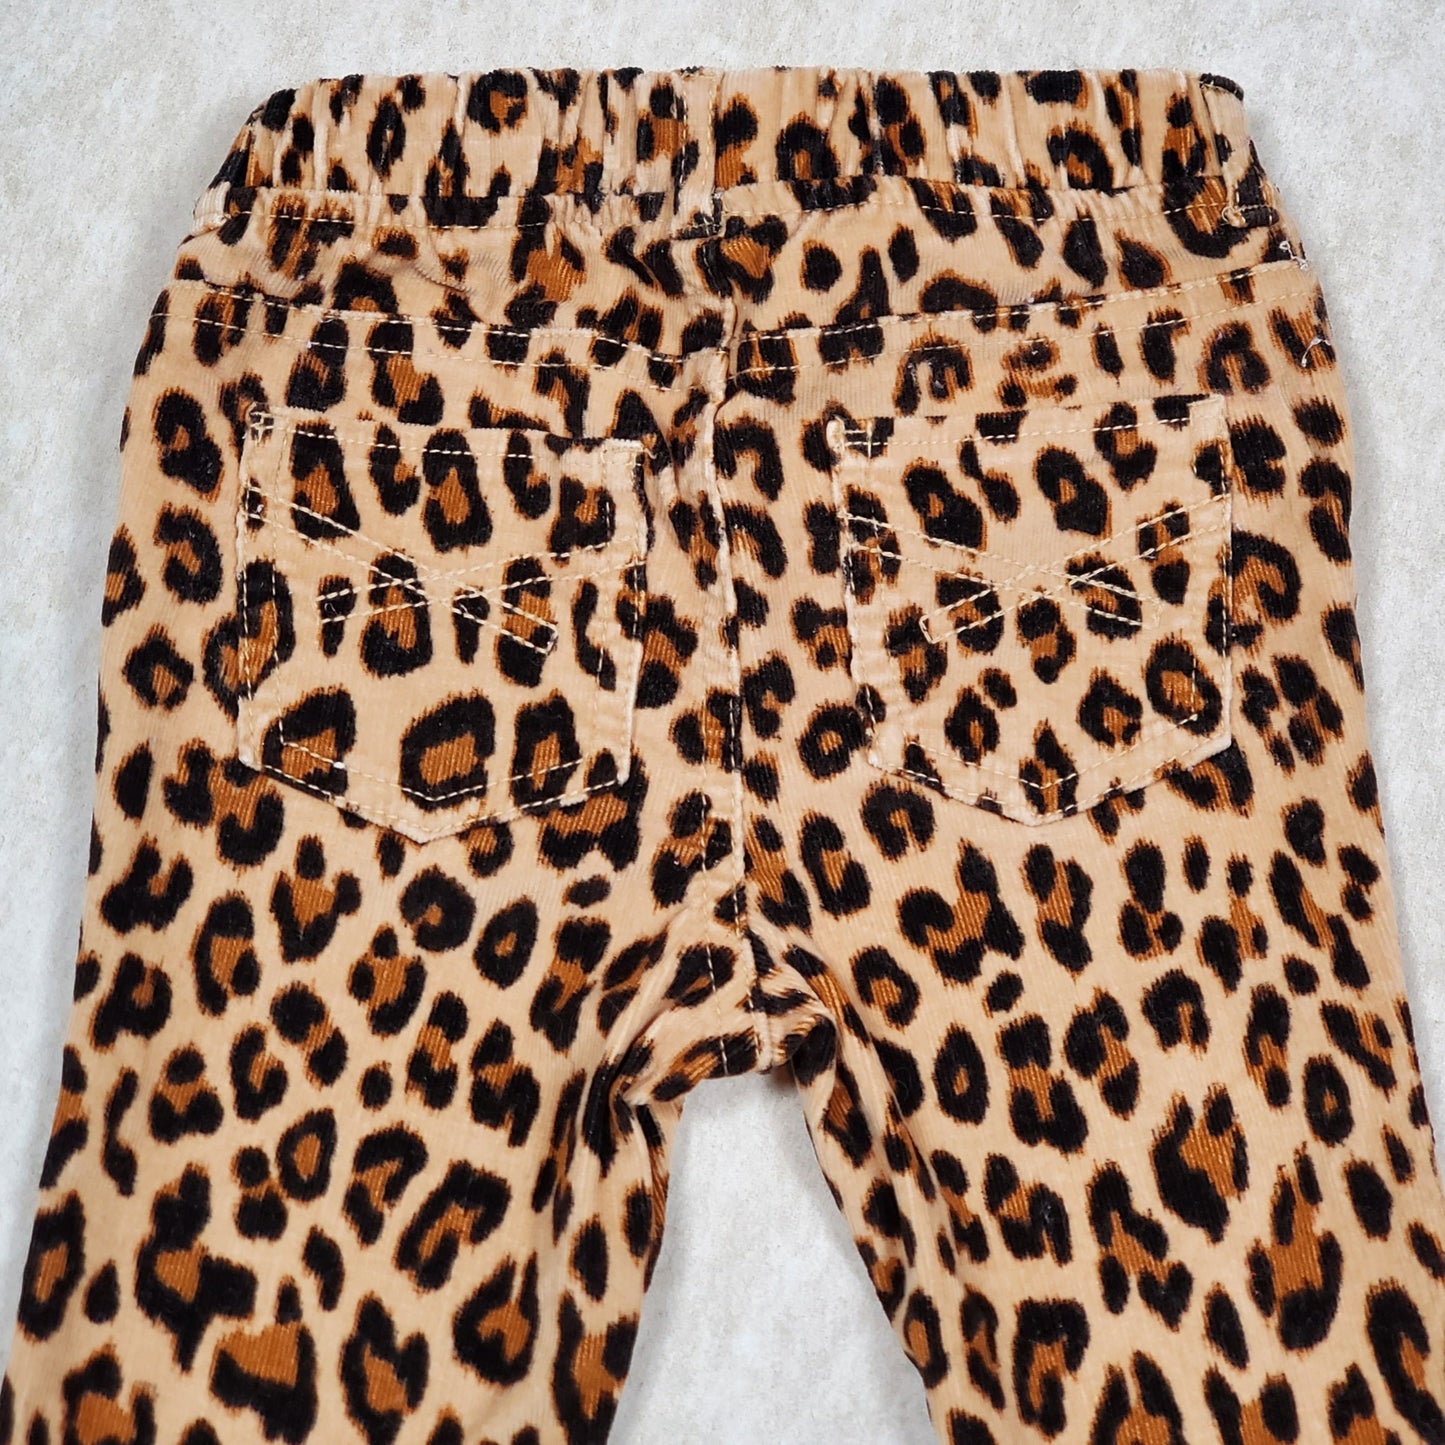 Baby Gap Girls Leopard Print Corduroy Pants 4Y Used, back pockets